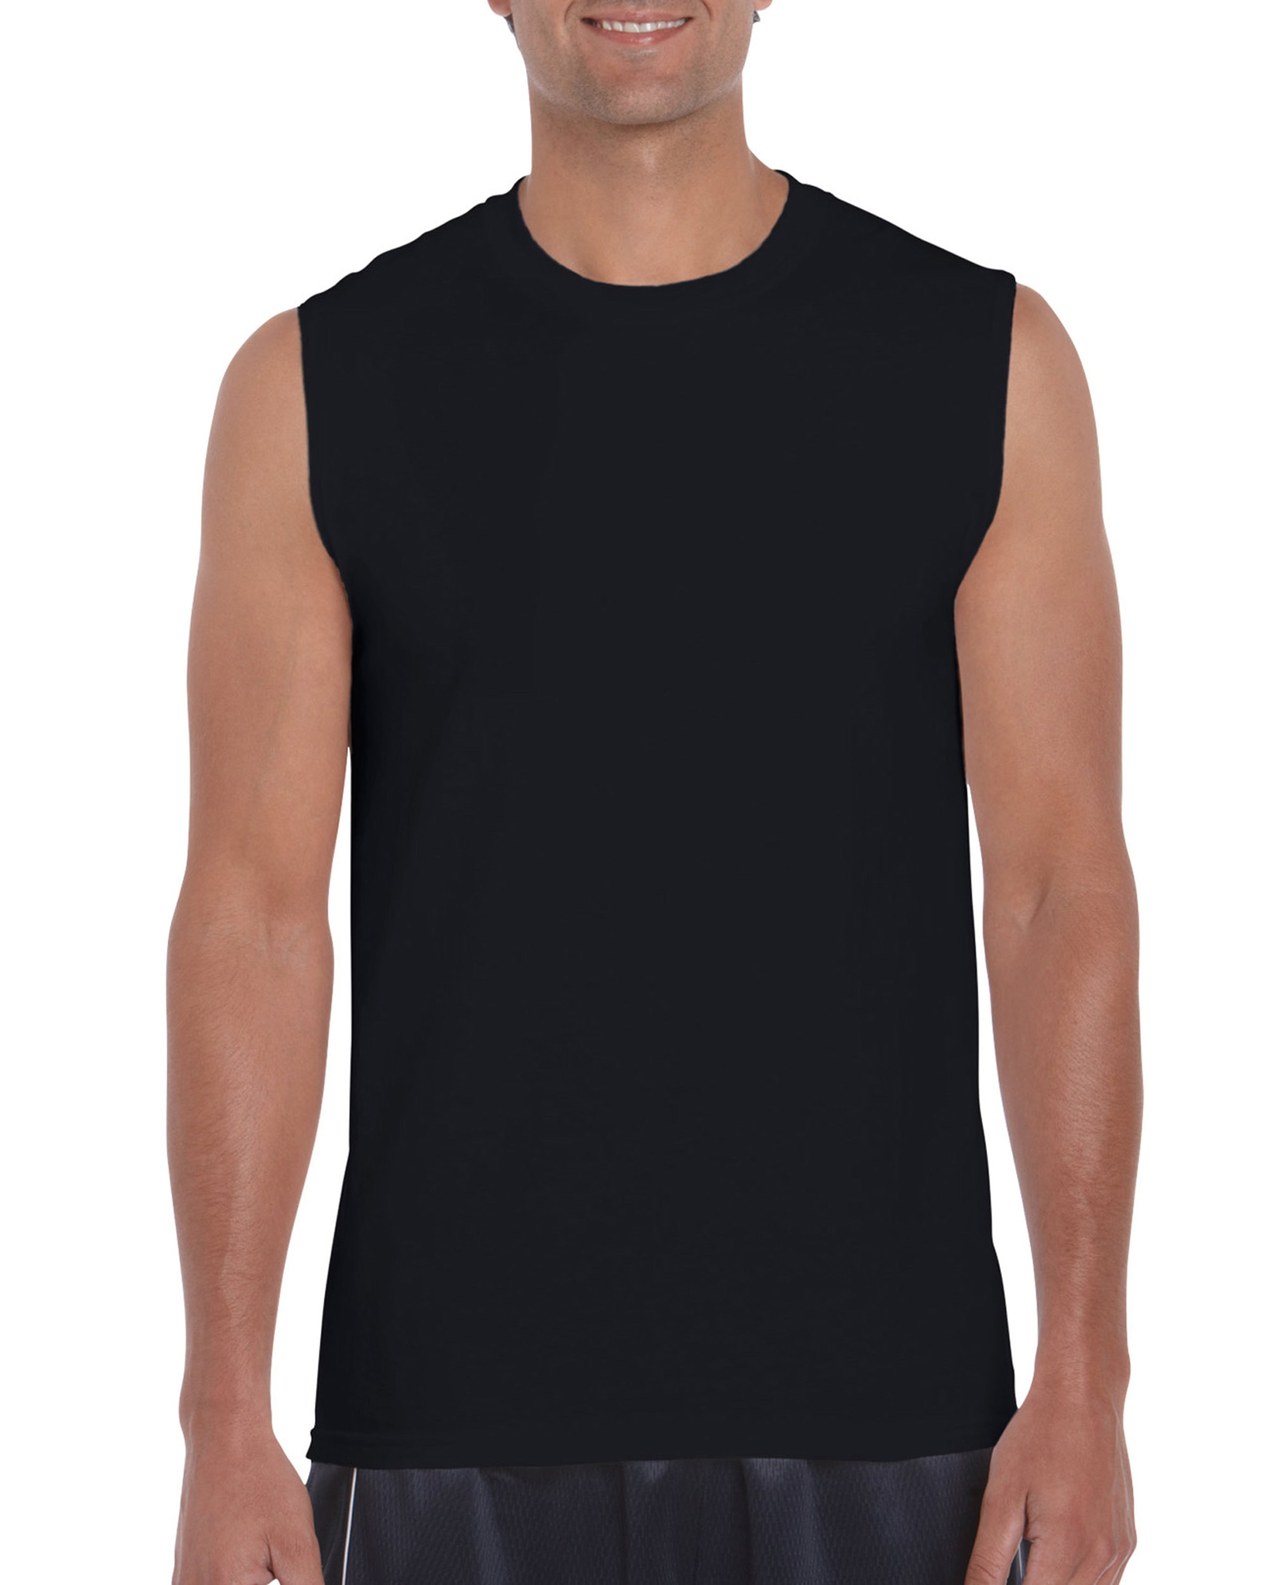 Promotional Gildan Ultra Cotton Adult Sleeveless T-shirt - Bongo